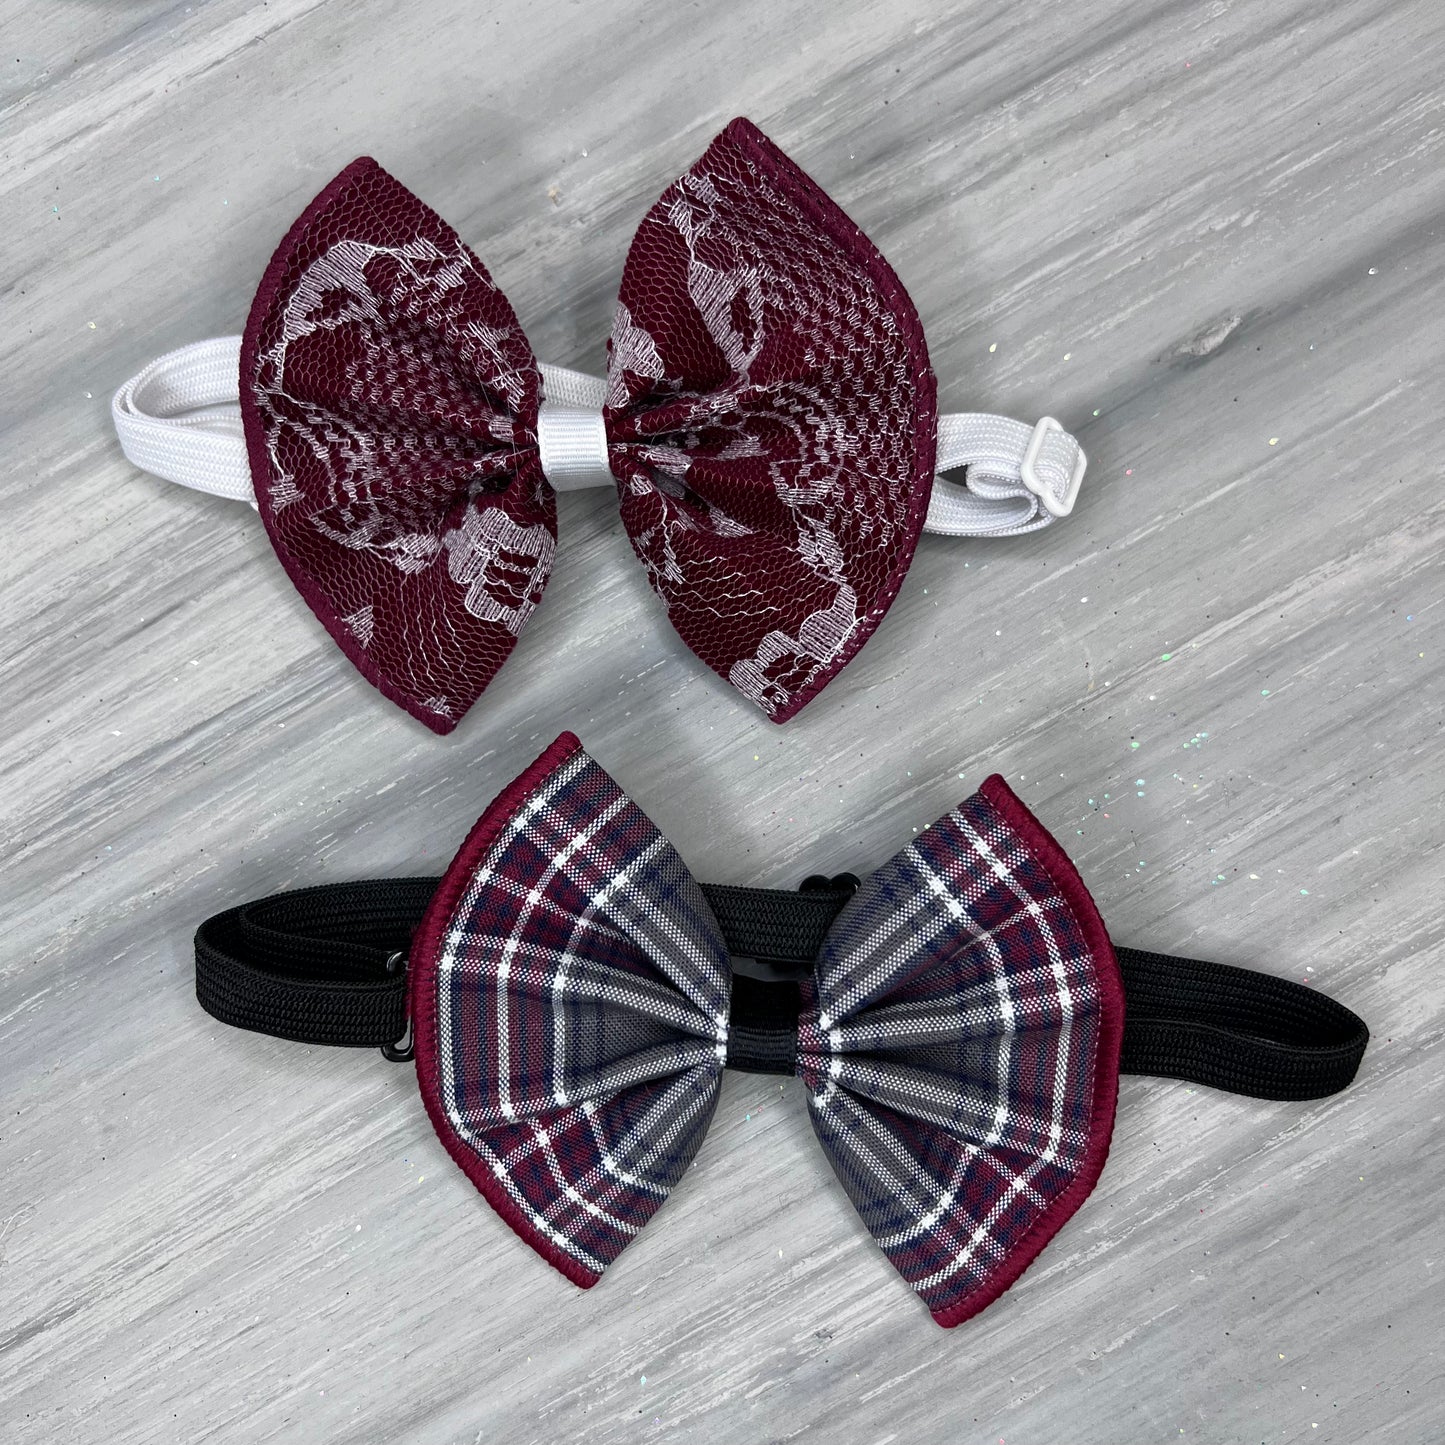 Jack and Jill - Jumbo Bow Tie - 4 Large Neckties